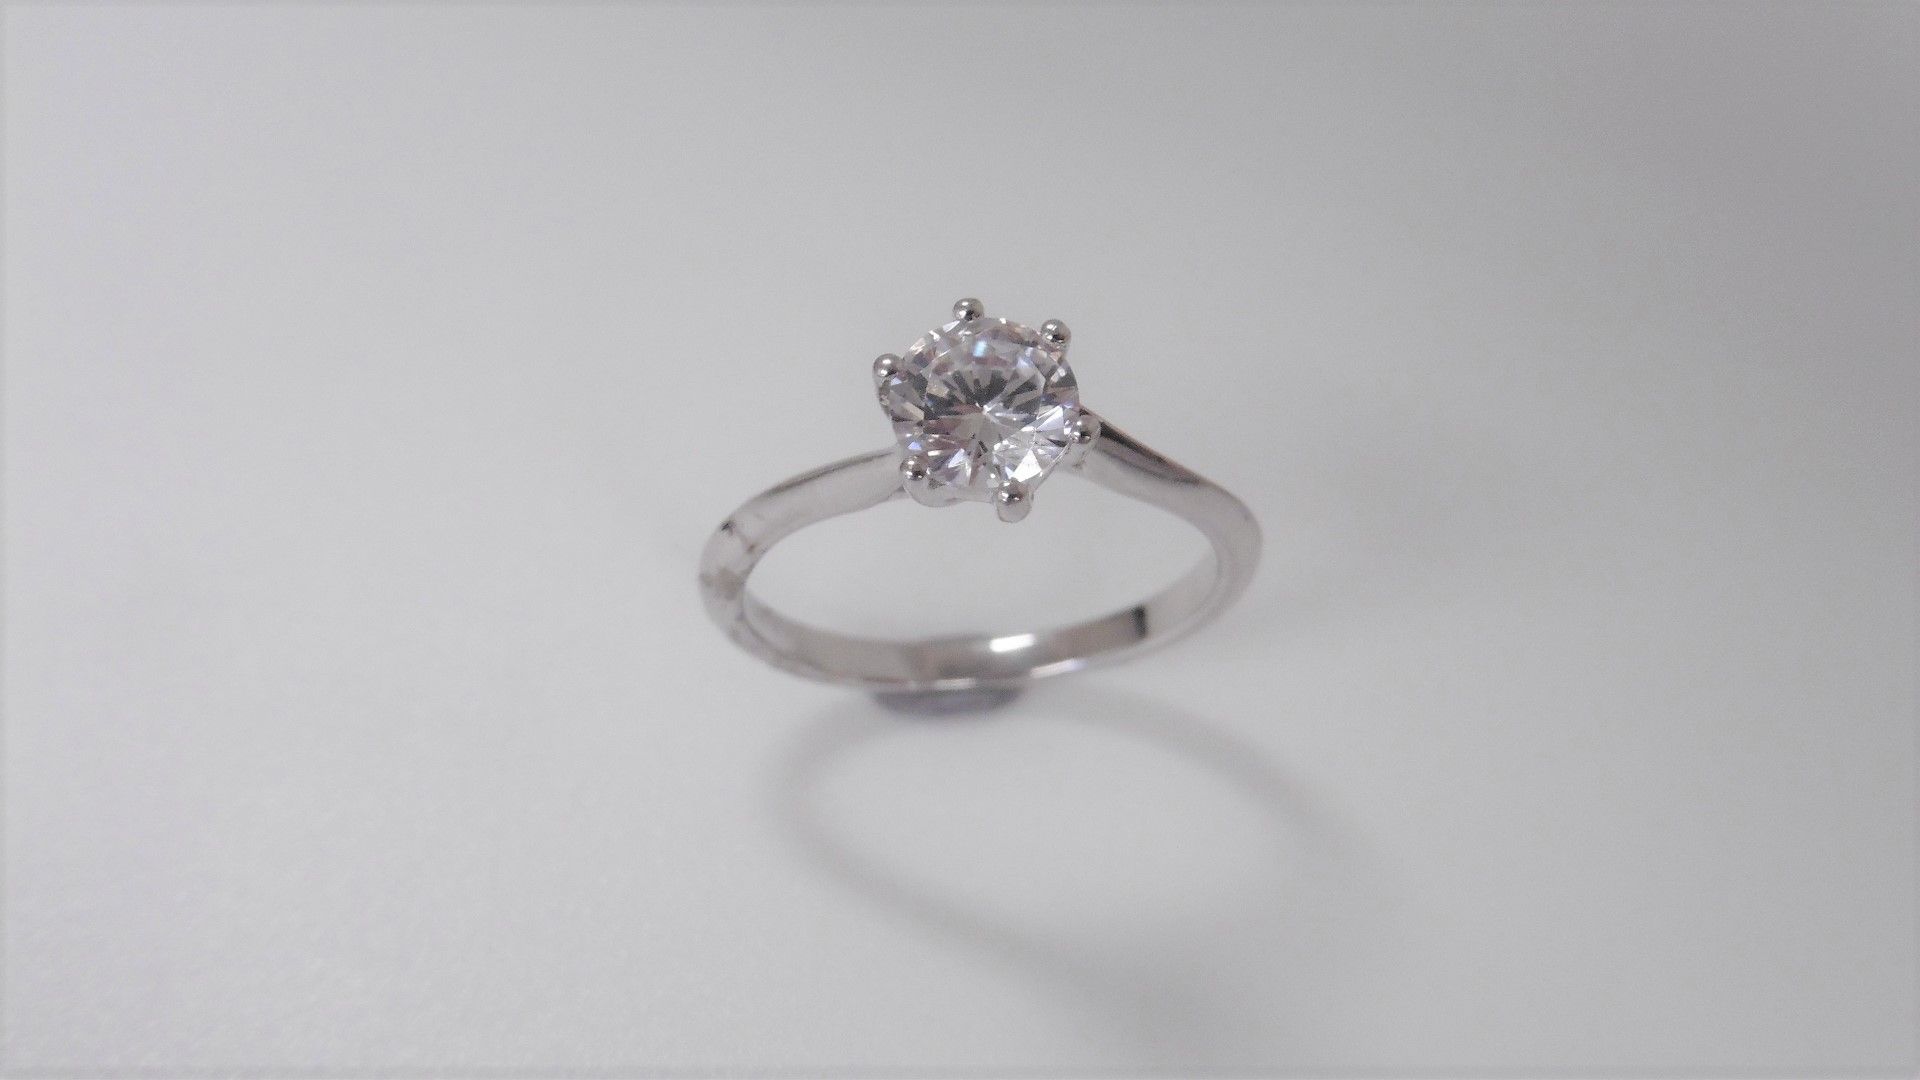 1.02 ct diamond twist solitaire ring set in platinum. 6 claw setting. Enhanced brilliant cut